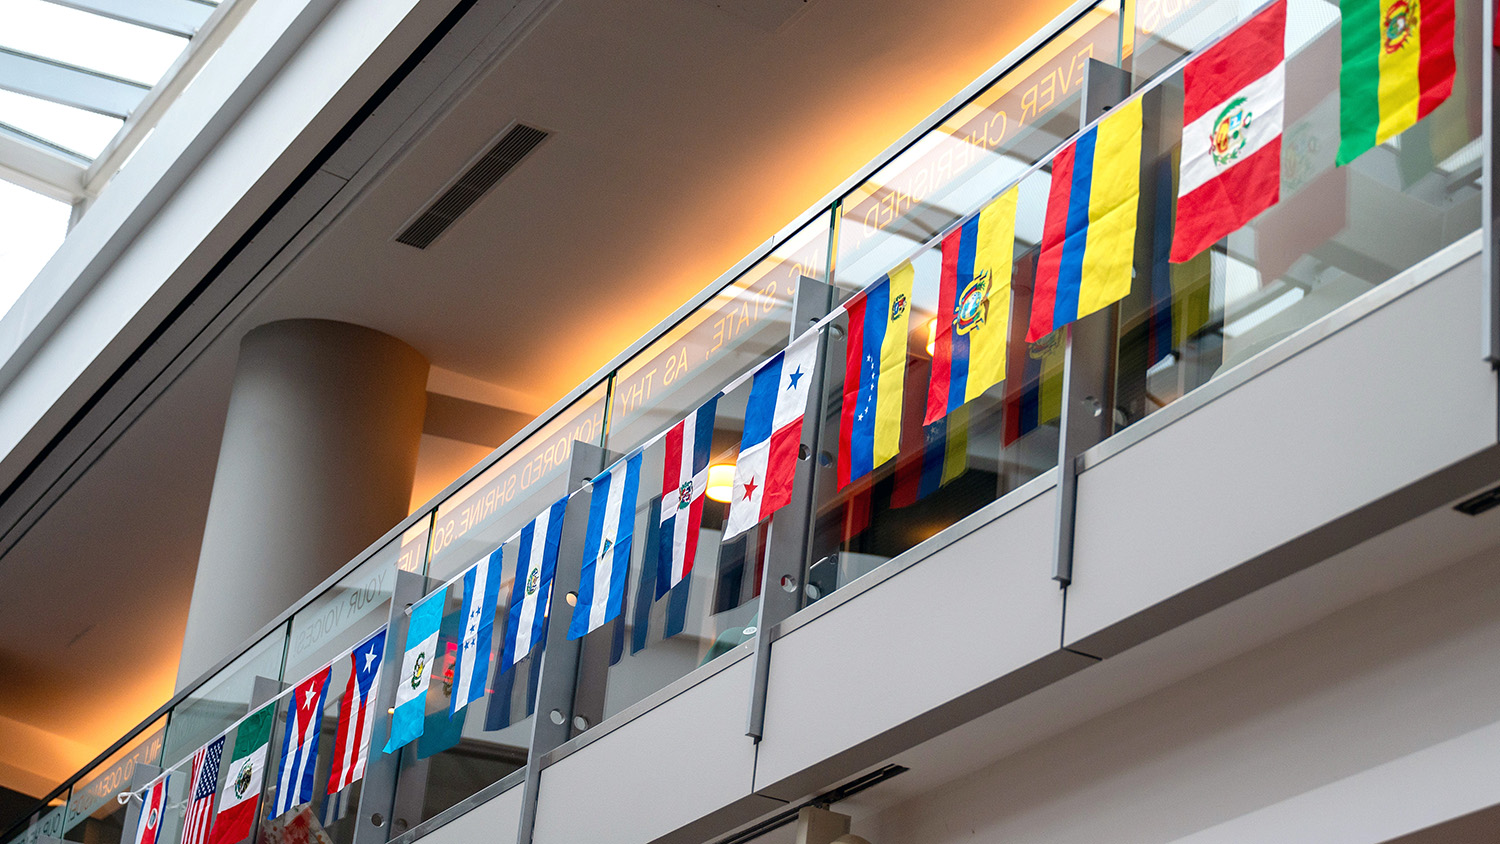 International flags on display